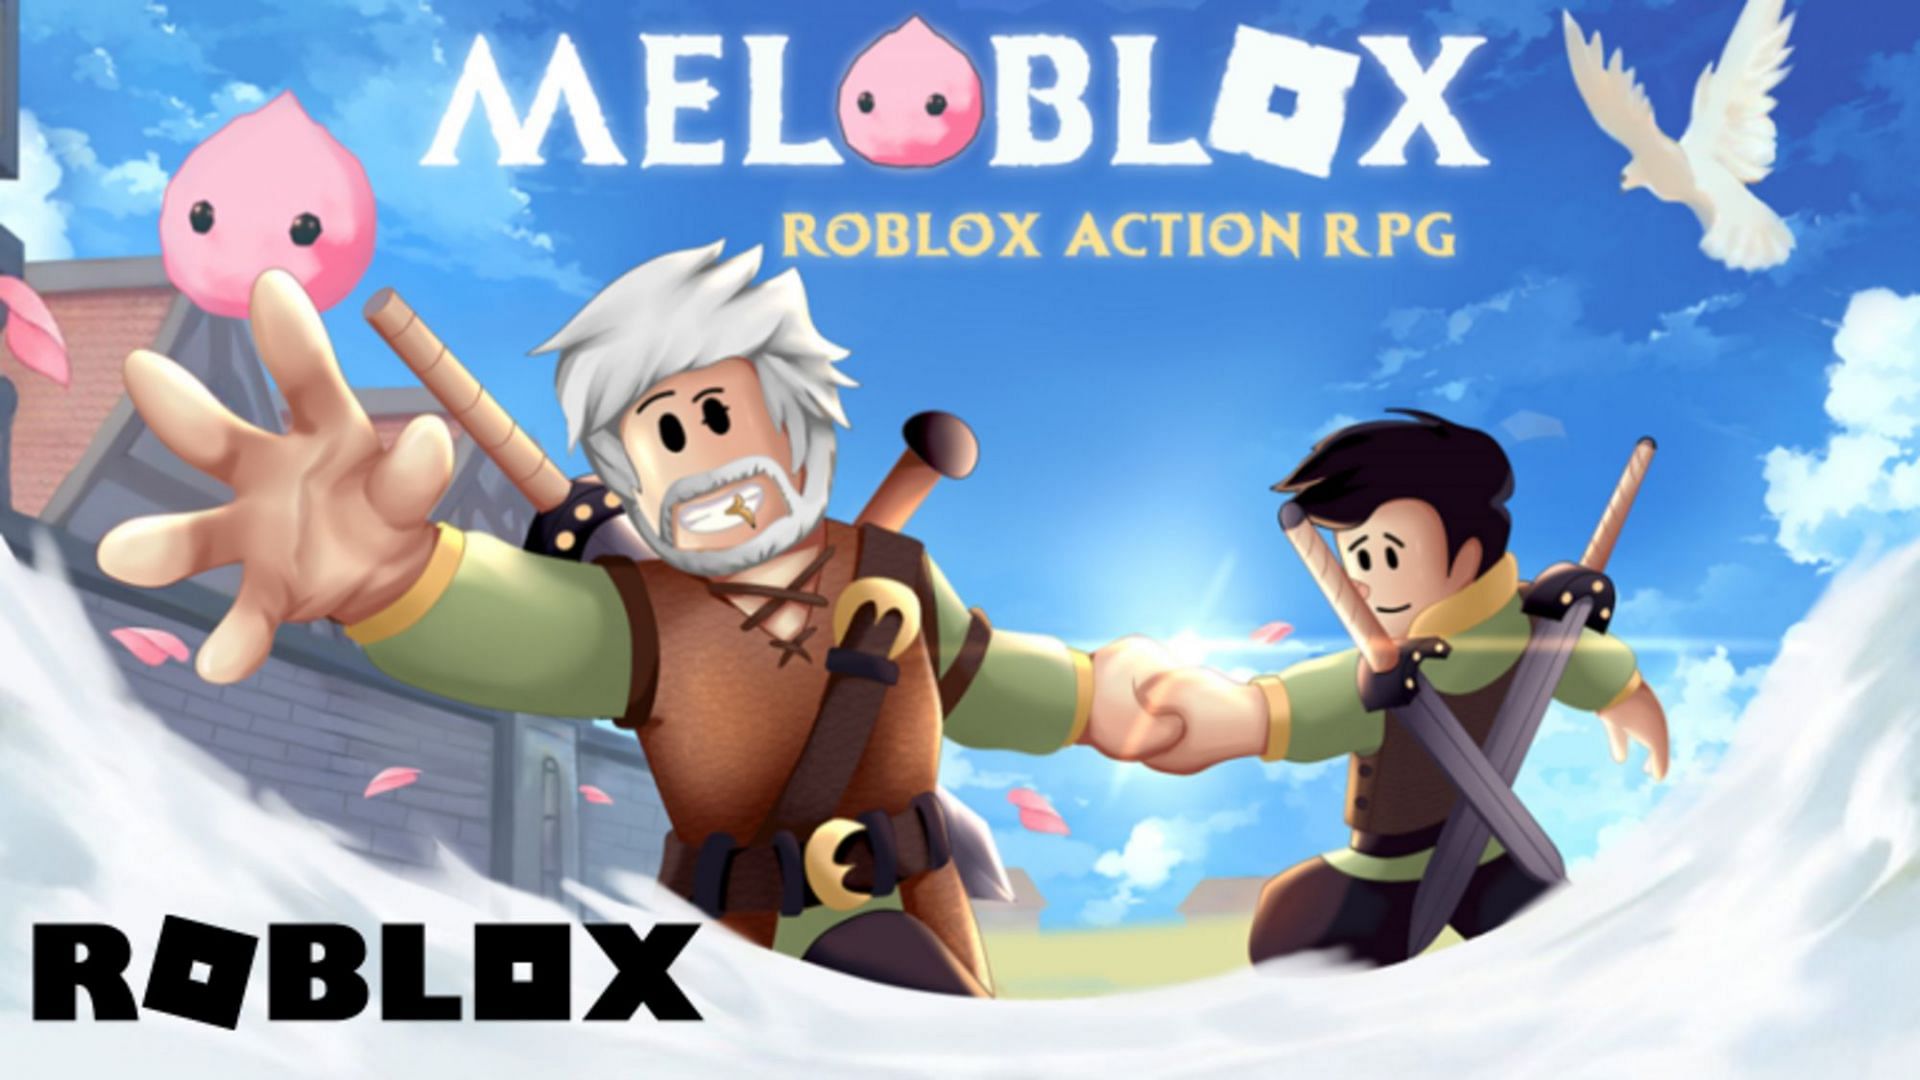 Codes to redeem free rewards in Roblox MeloBlox (Image via Roblox)